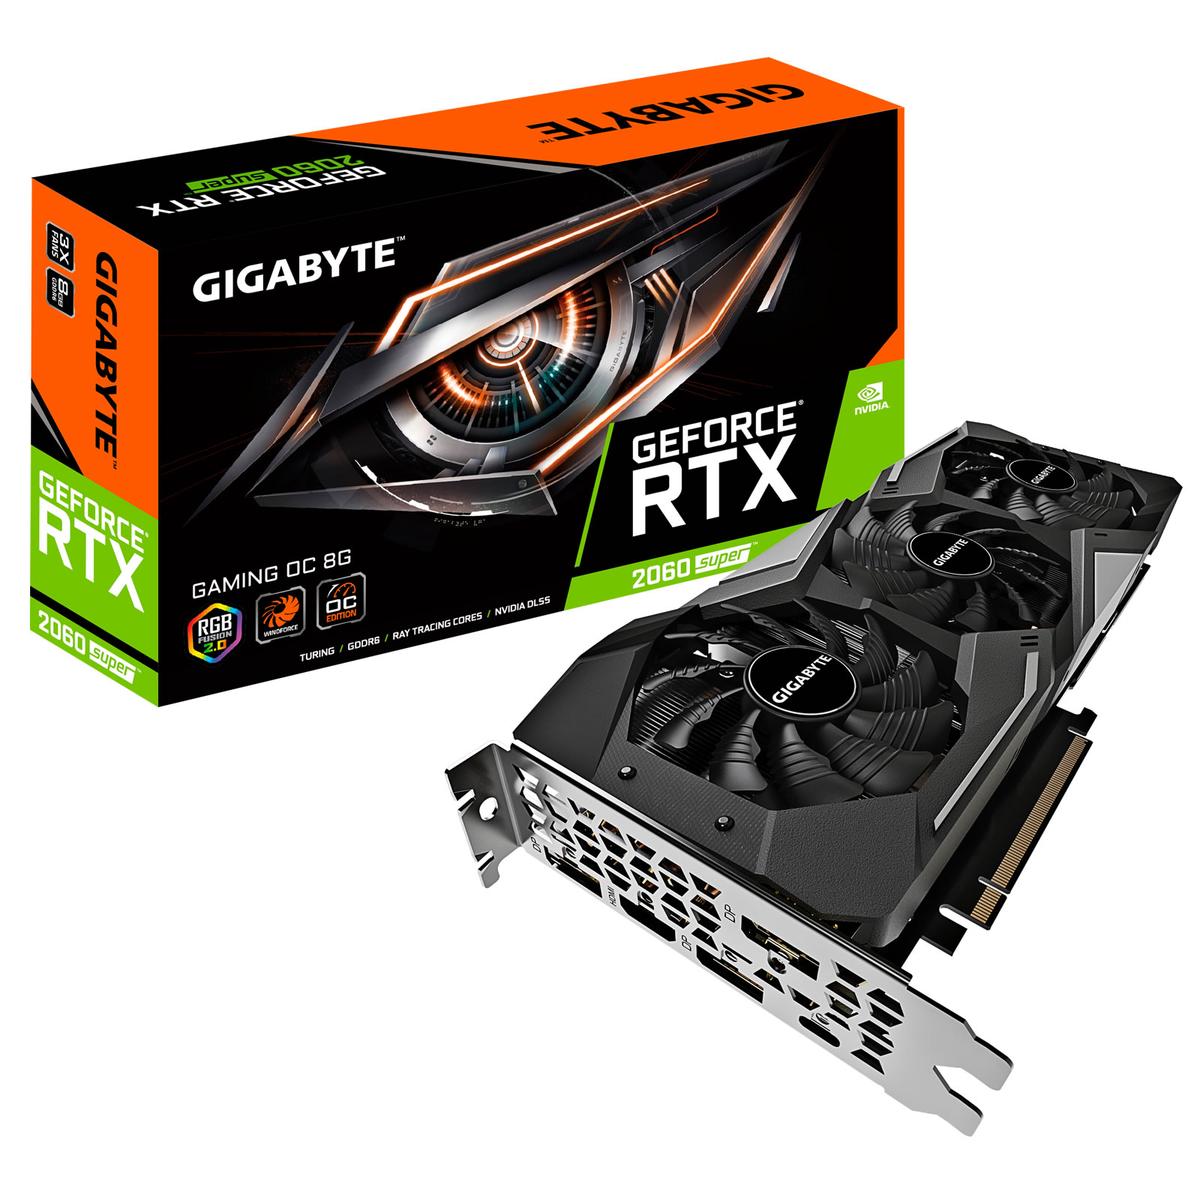 Gigabyte GeForce RTX 2060 Super 8 GB OC